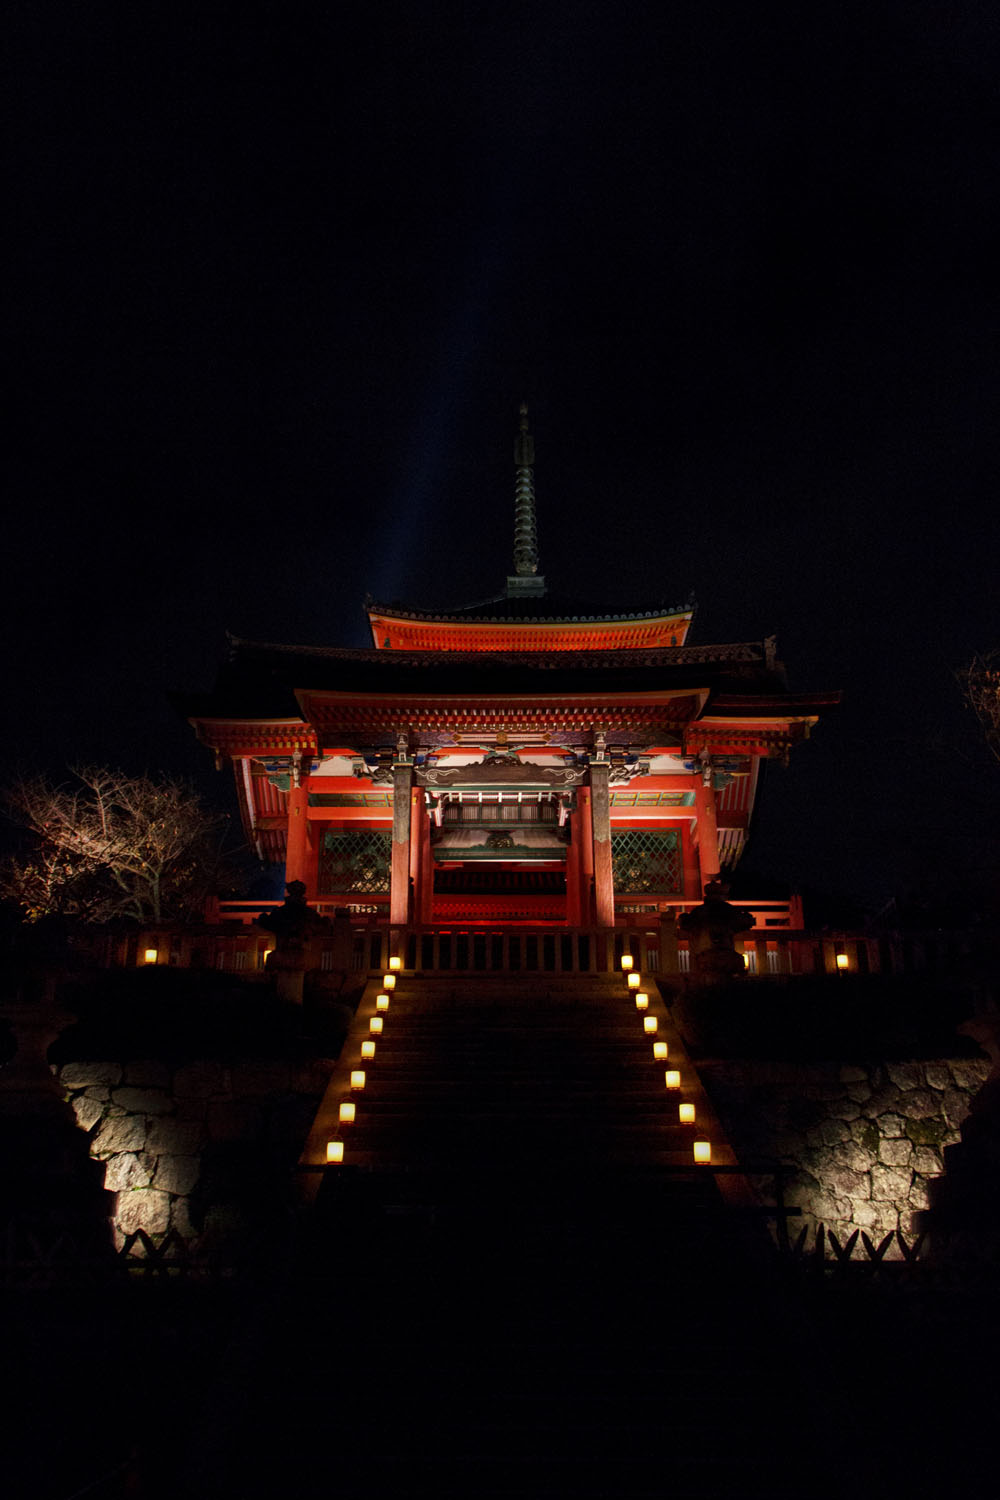 Night Illumination at Kiyomizudera & Kodaiji, Kyoto